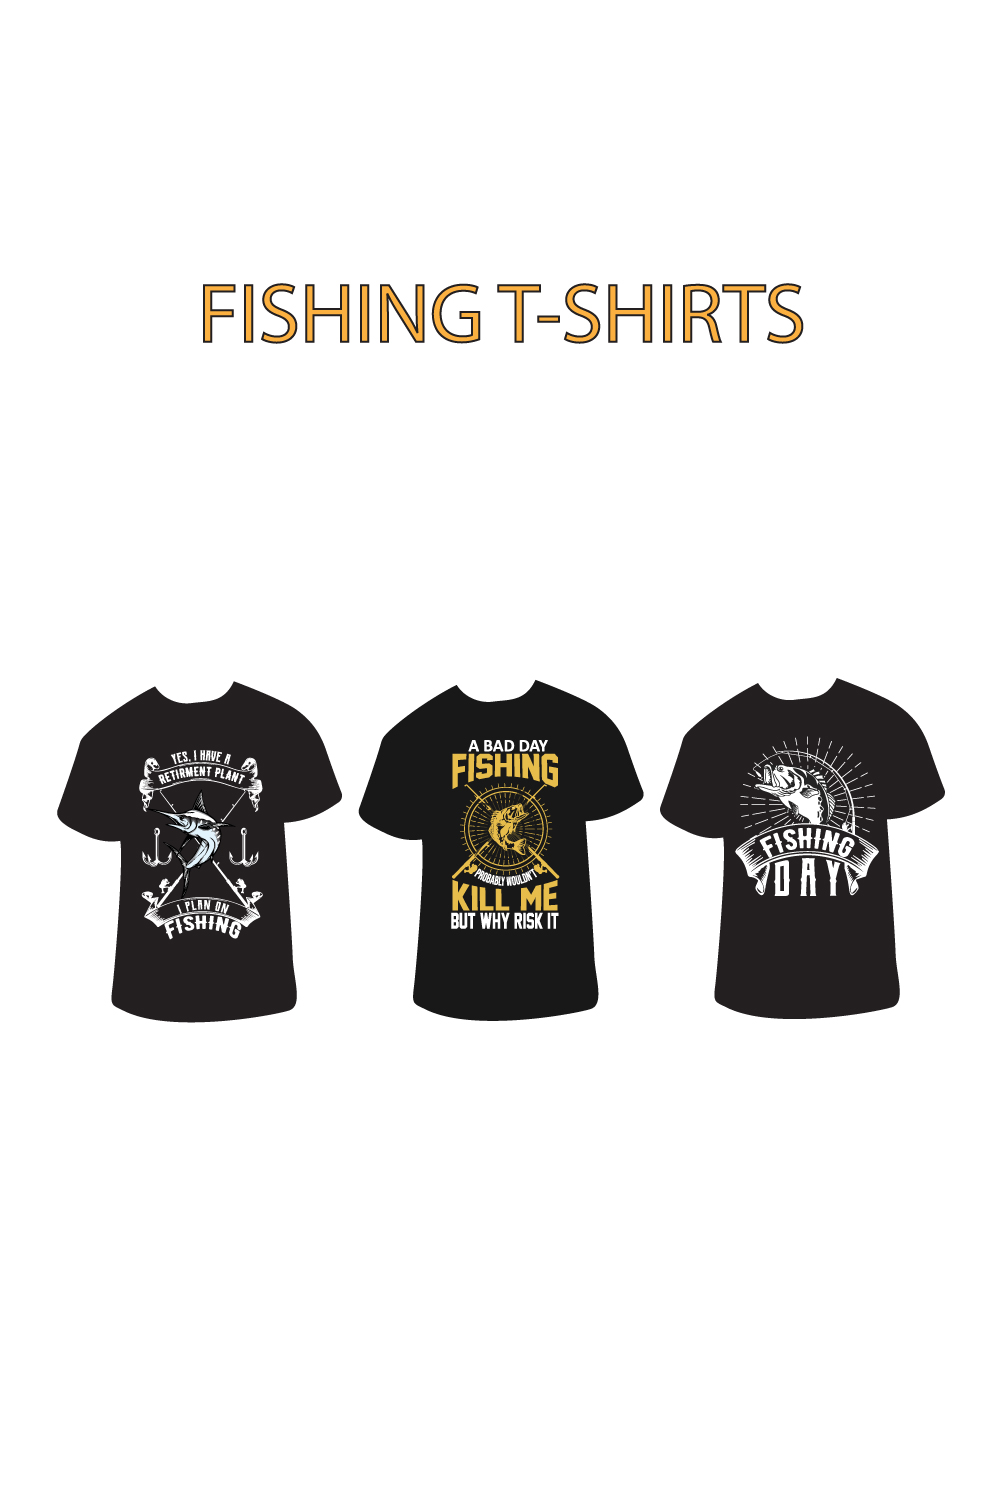 Fishing T-shirt Design pinterest preview image.